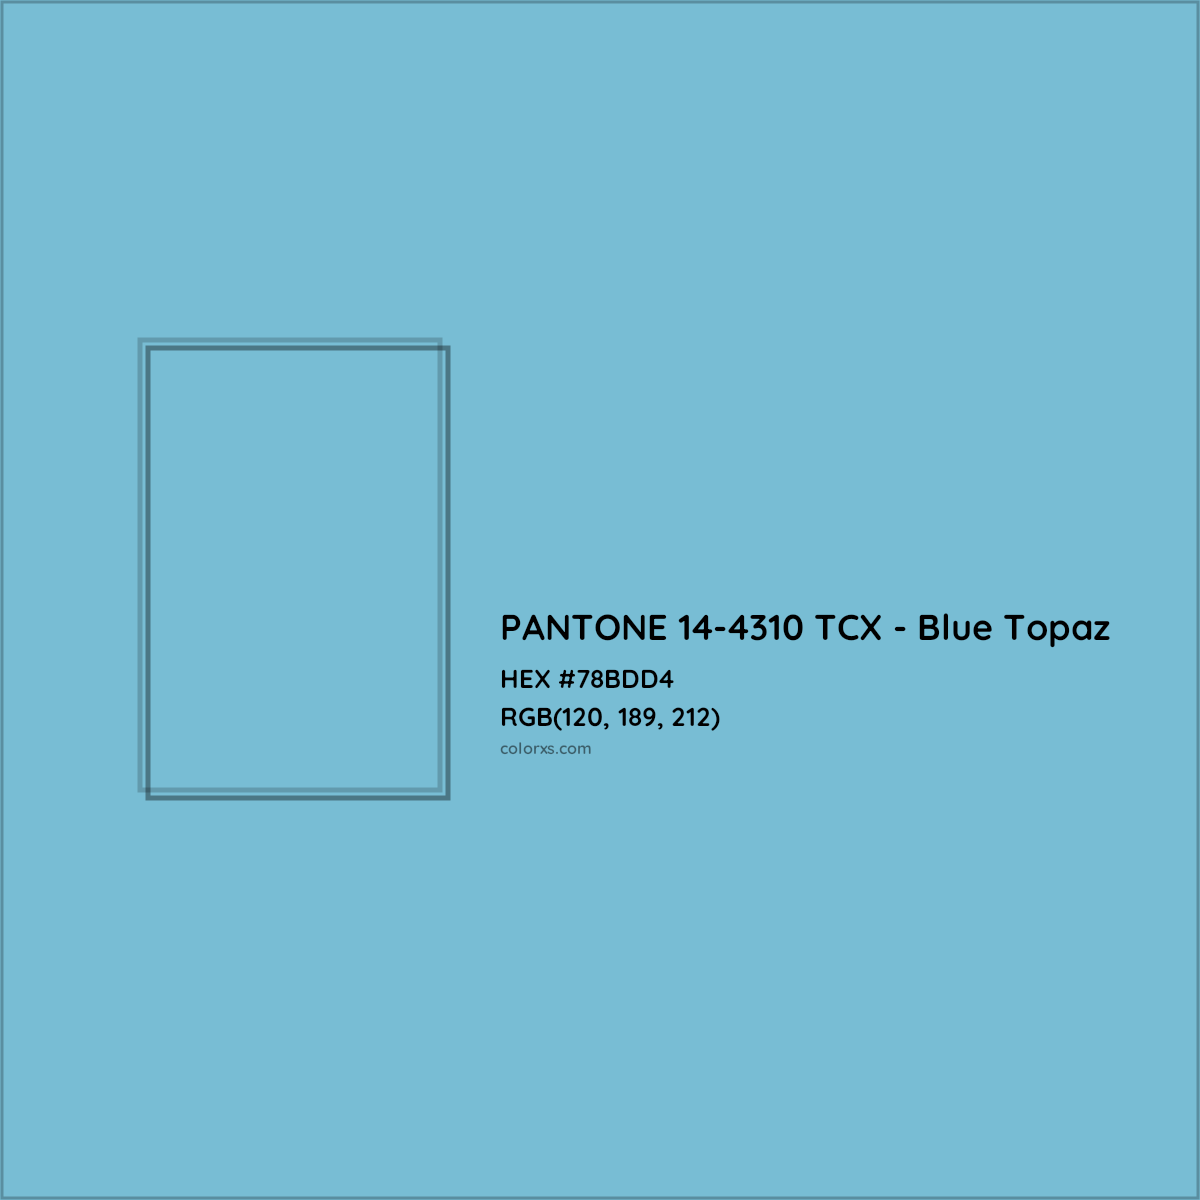 HEX #78BDD4 PANTONE 14-4310 TCX - Blue Topaz CMS Pantone TCX - Color Code